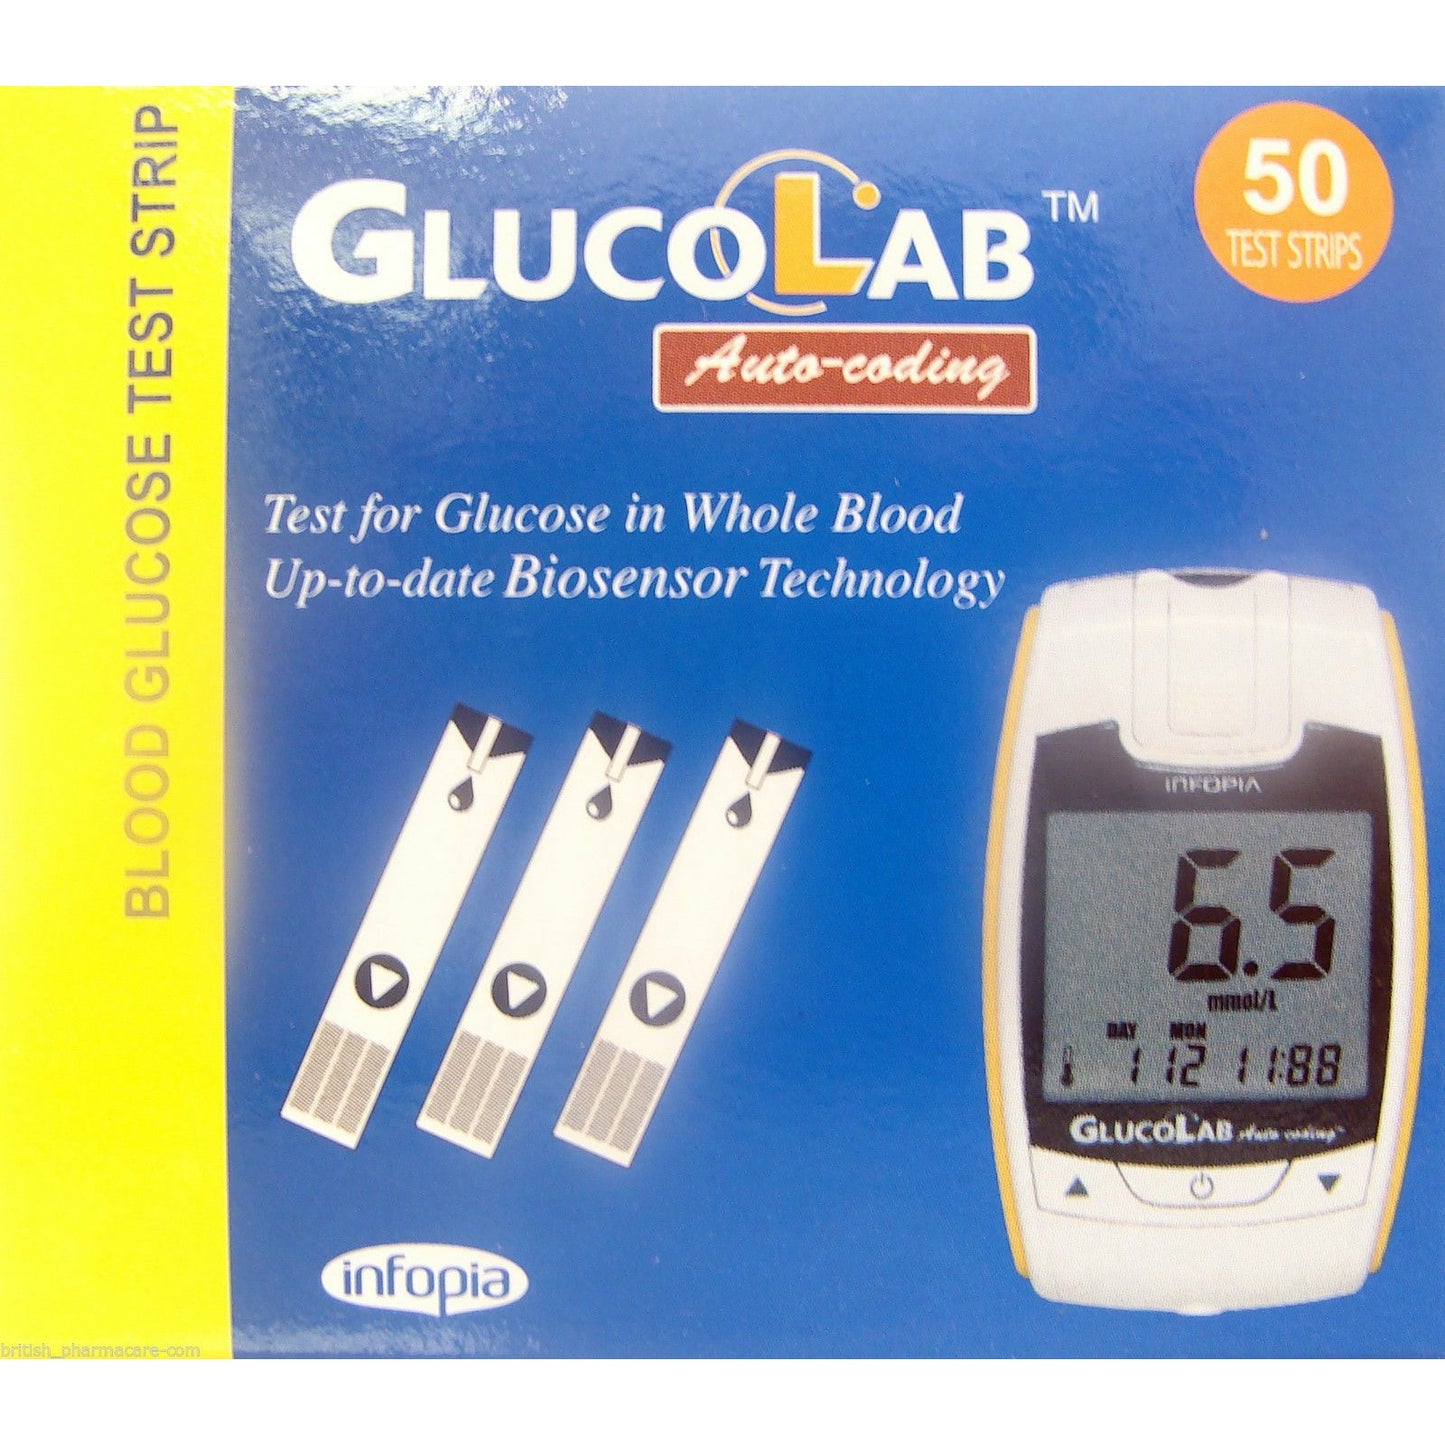 GlucoLab Auto-Coding blood glucose test strips, 50 strips. Biosensor technology